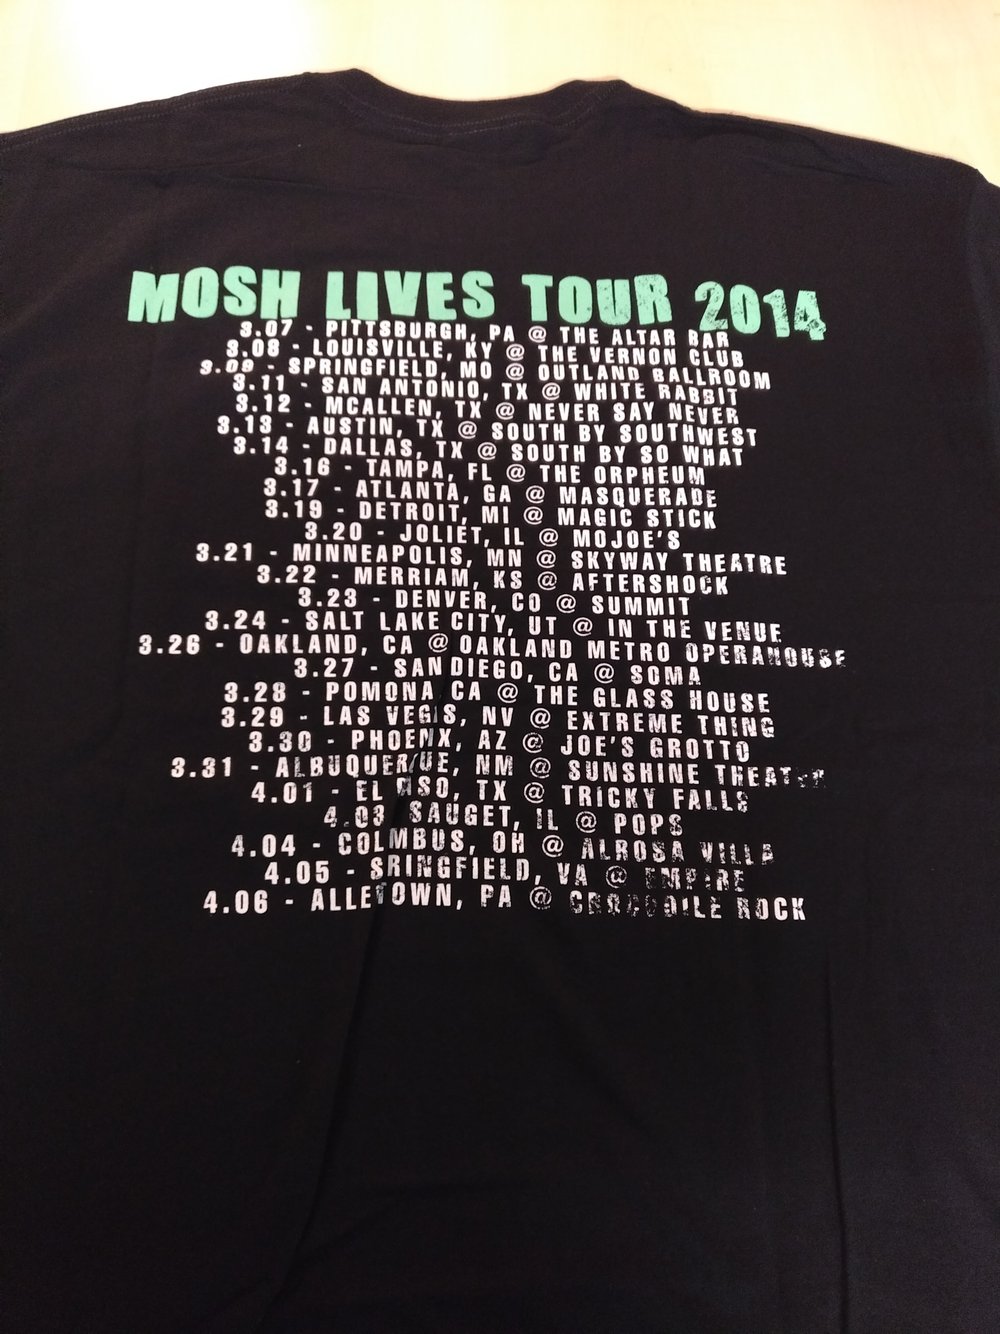 EMMURE "MOSH LIVES 2014 TOUR" SHIRT